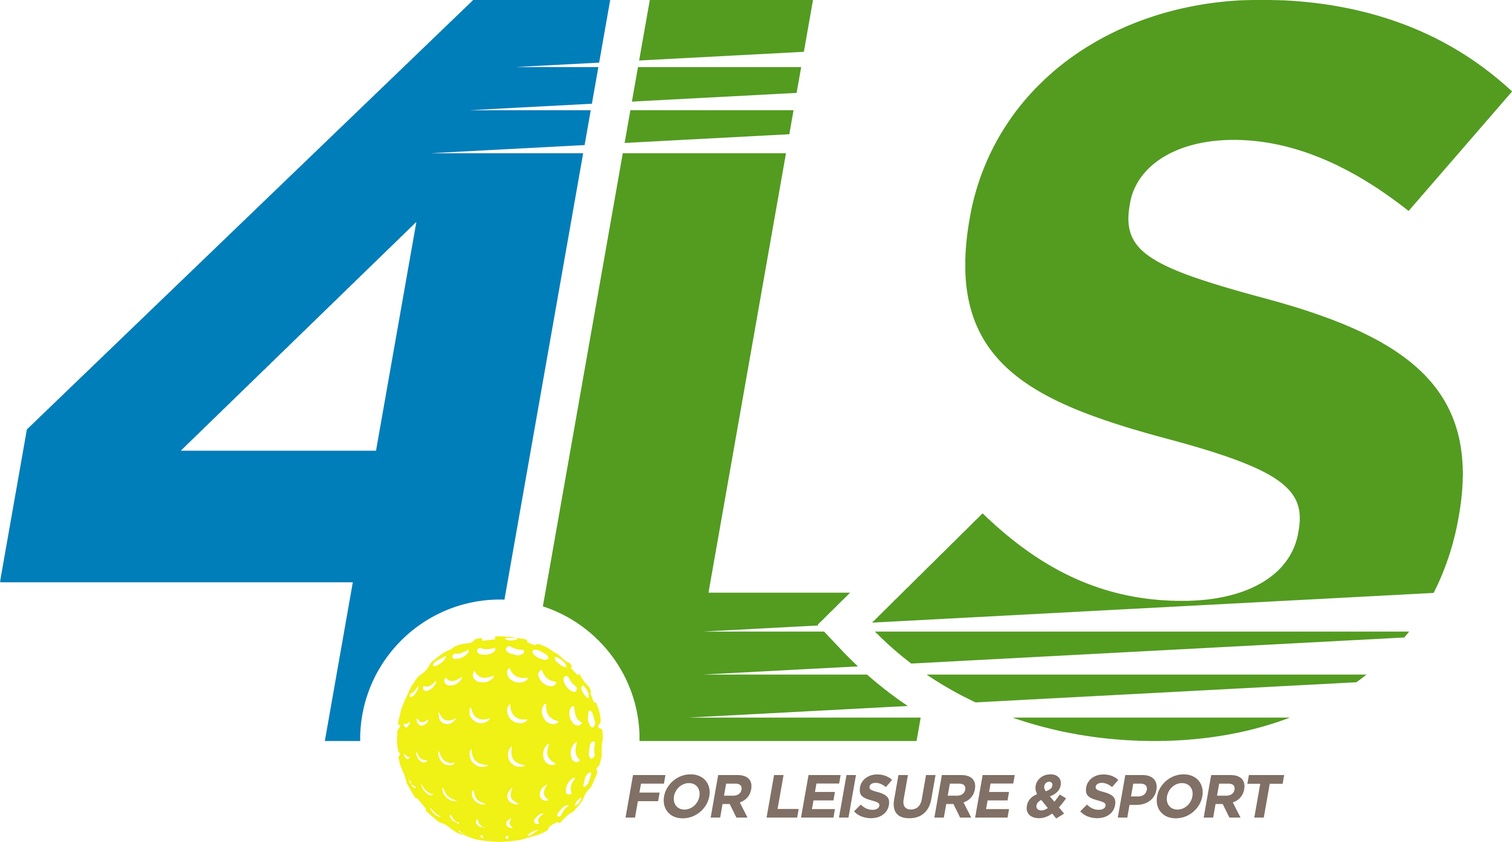 For Leisure & Sport logo